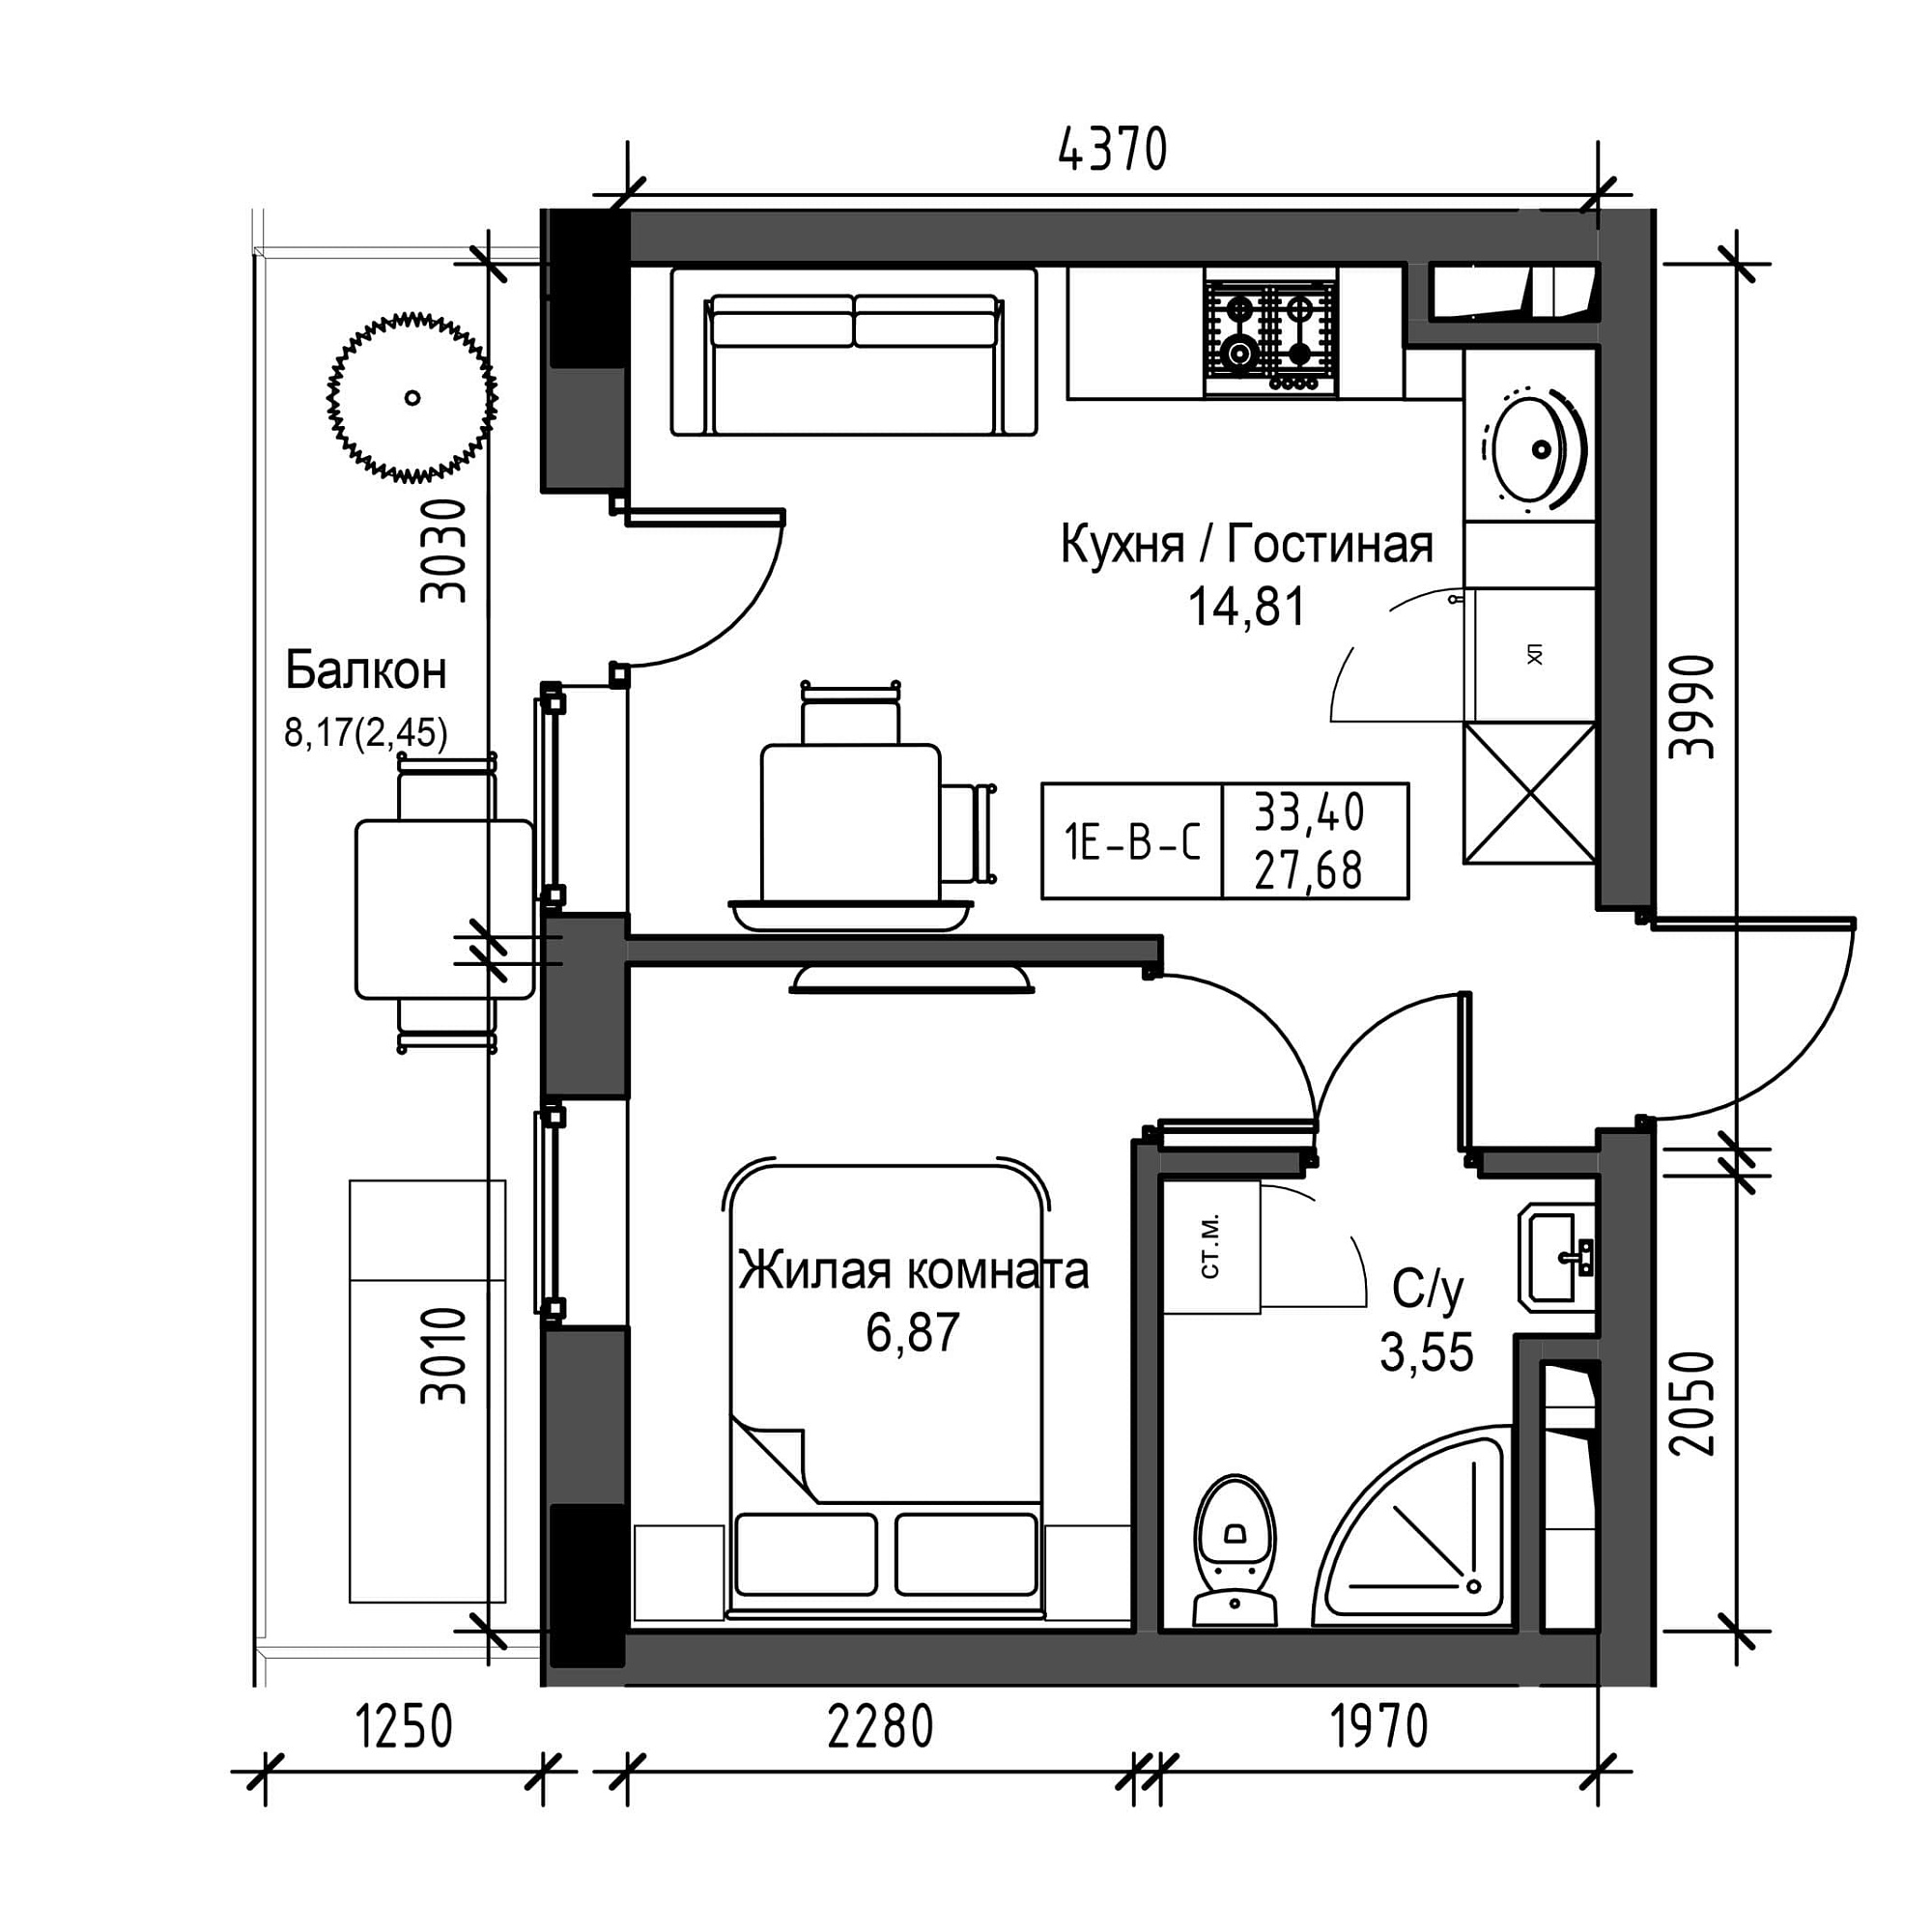 Планування 1-к квартира площею 27.68м2, UM-001-05/0019.